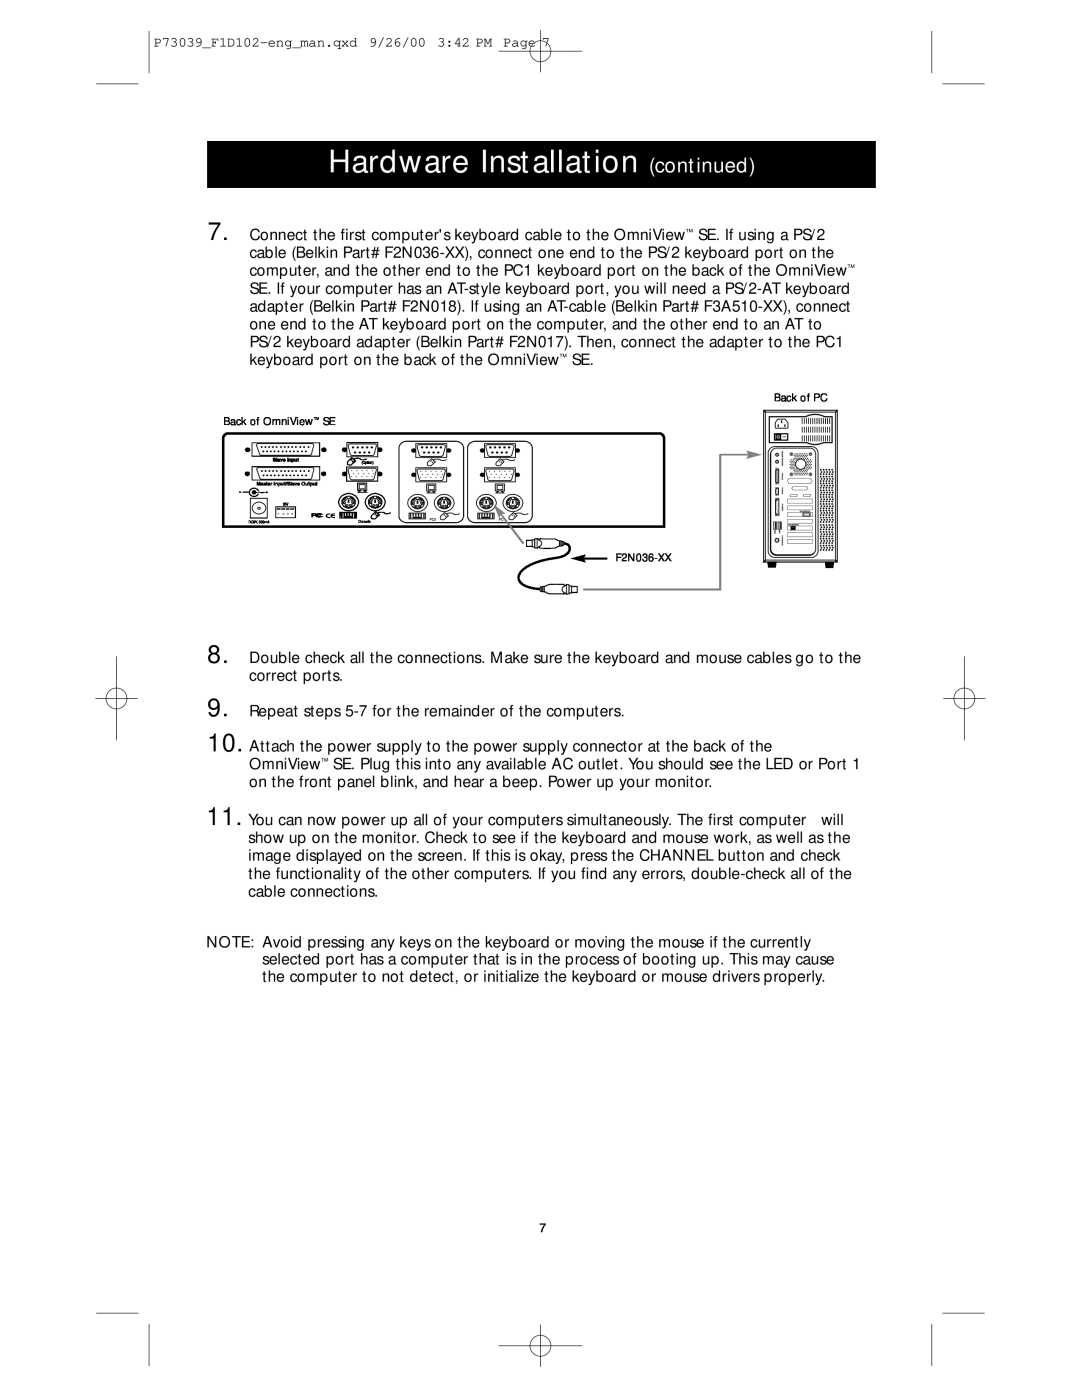 Belkin SE 2-Port user manual Hardware Installation continued, Back of PC Back of OmniView SE F2N036-XX 